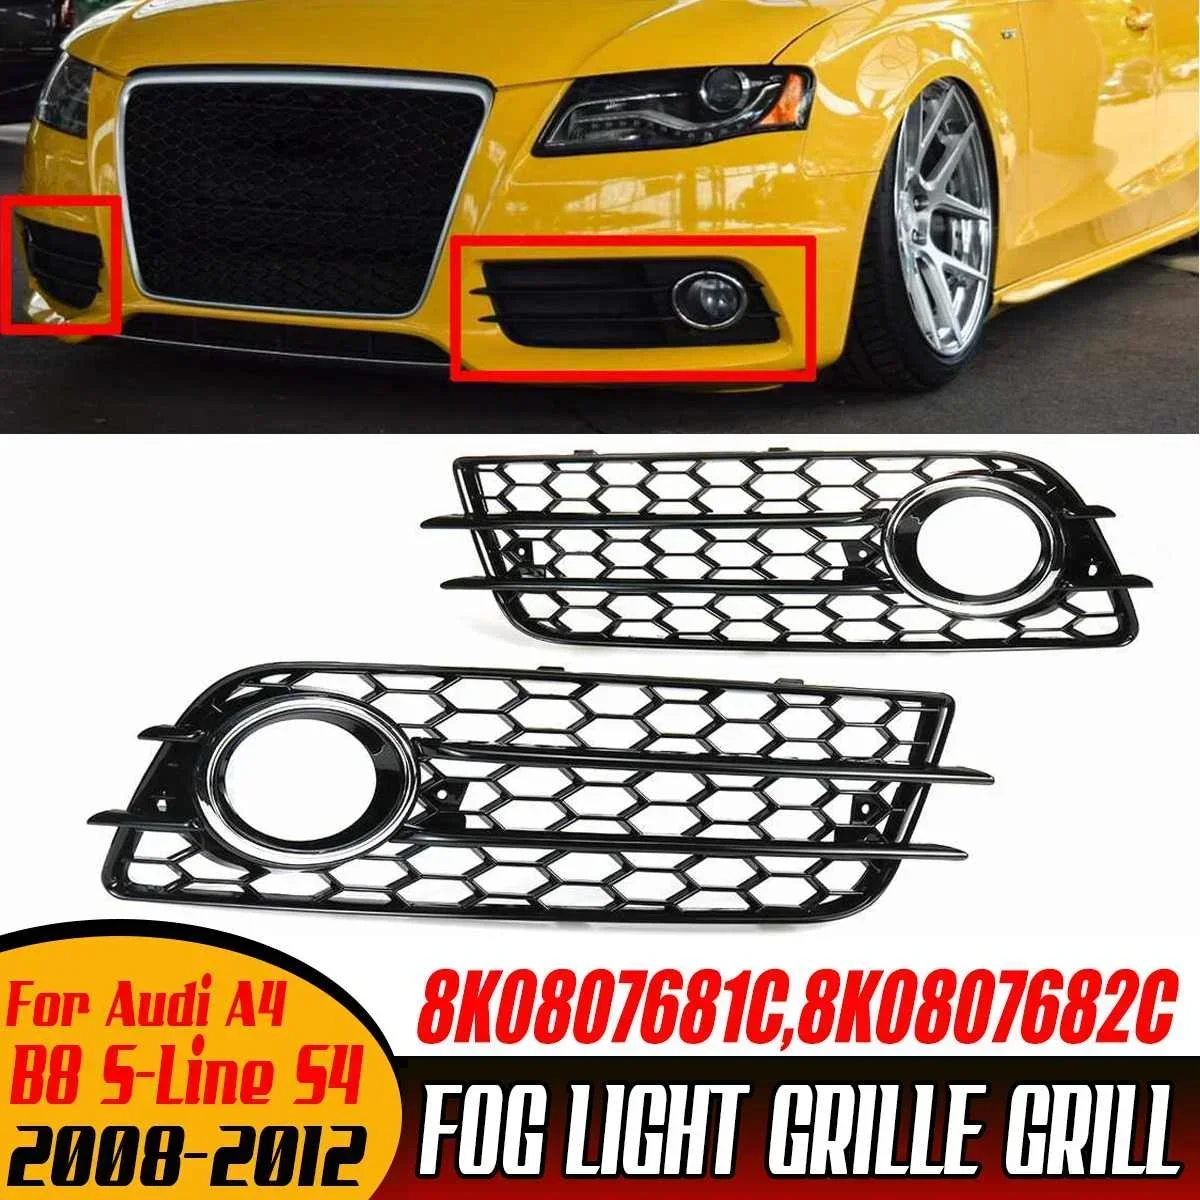 

2pcs Car Front Bumper Fog Light Grille Cover Honeycomb Hex Grille Grill For Audi A4 B8 S-Line S4 2008-2012 8K0807681C 8K0807682C